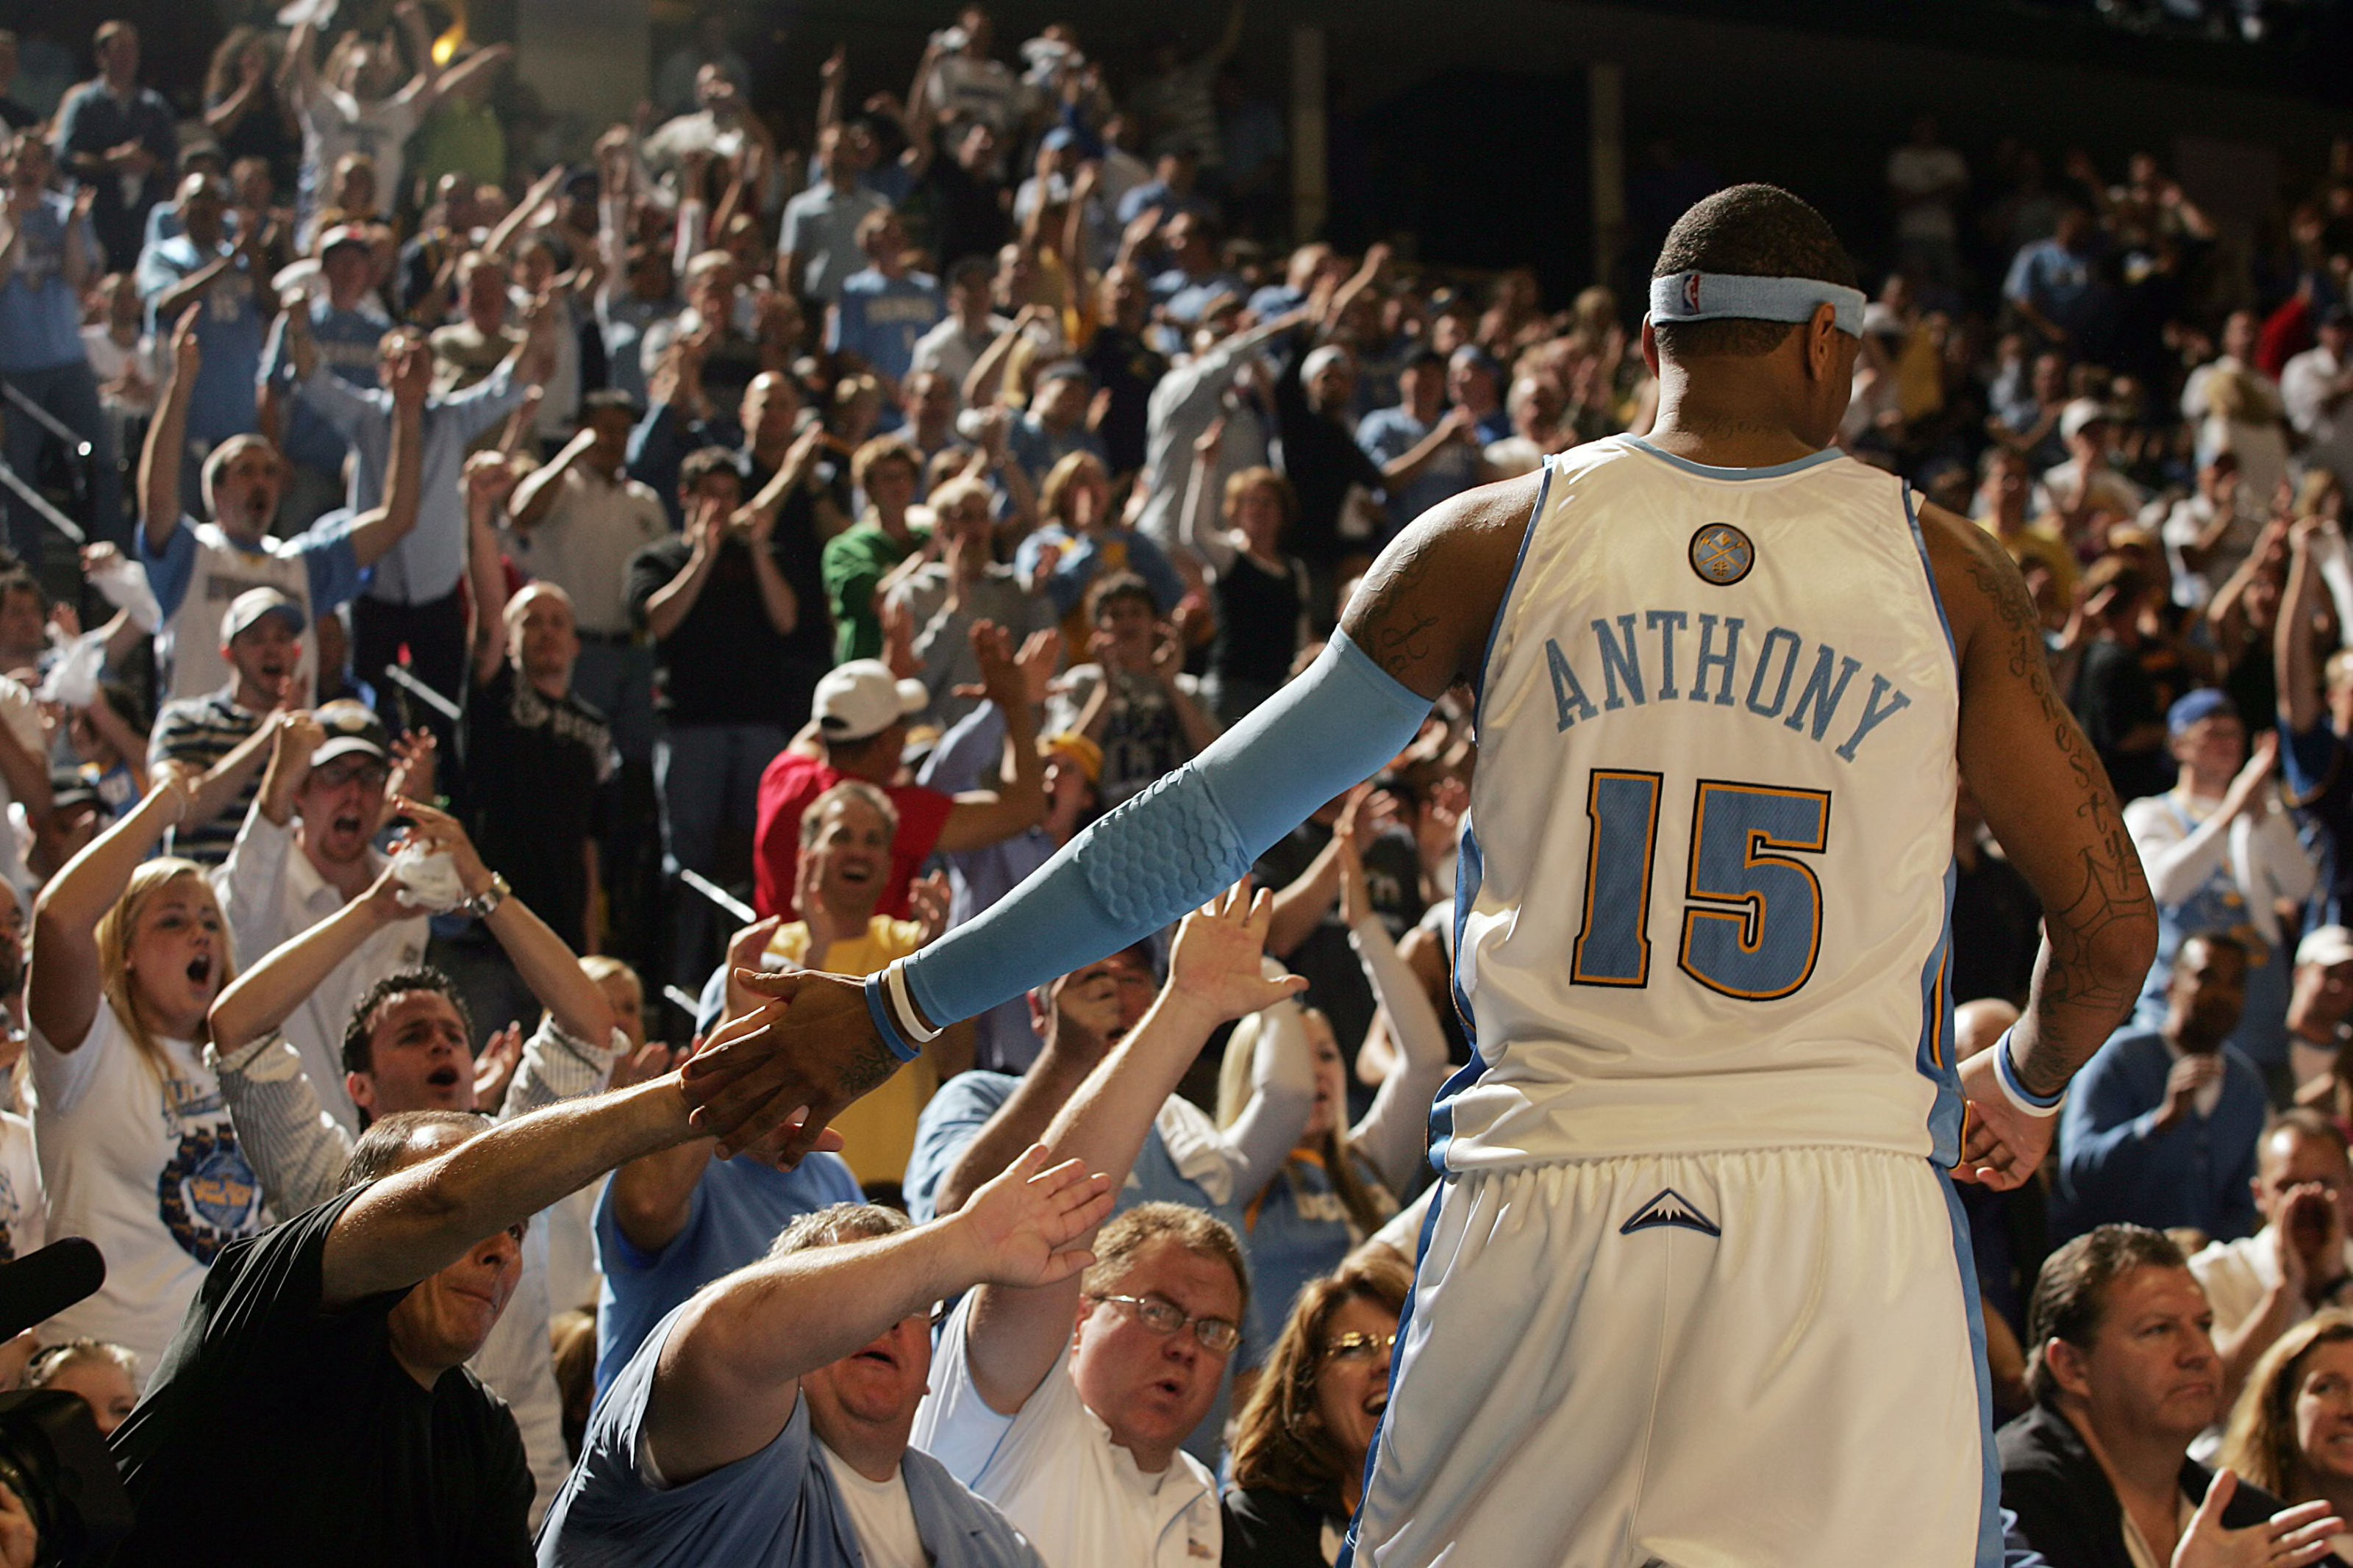 Carmelo Anthony Hopes Knicks Retire His No. 7 Jersey at Madison